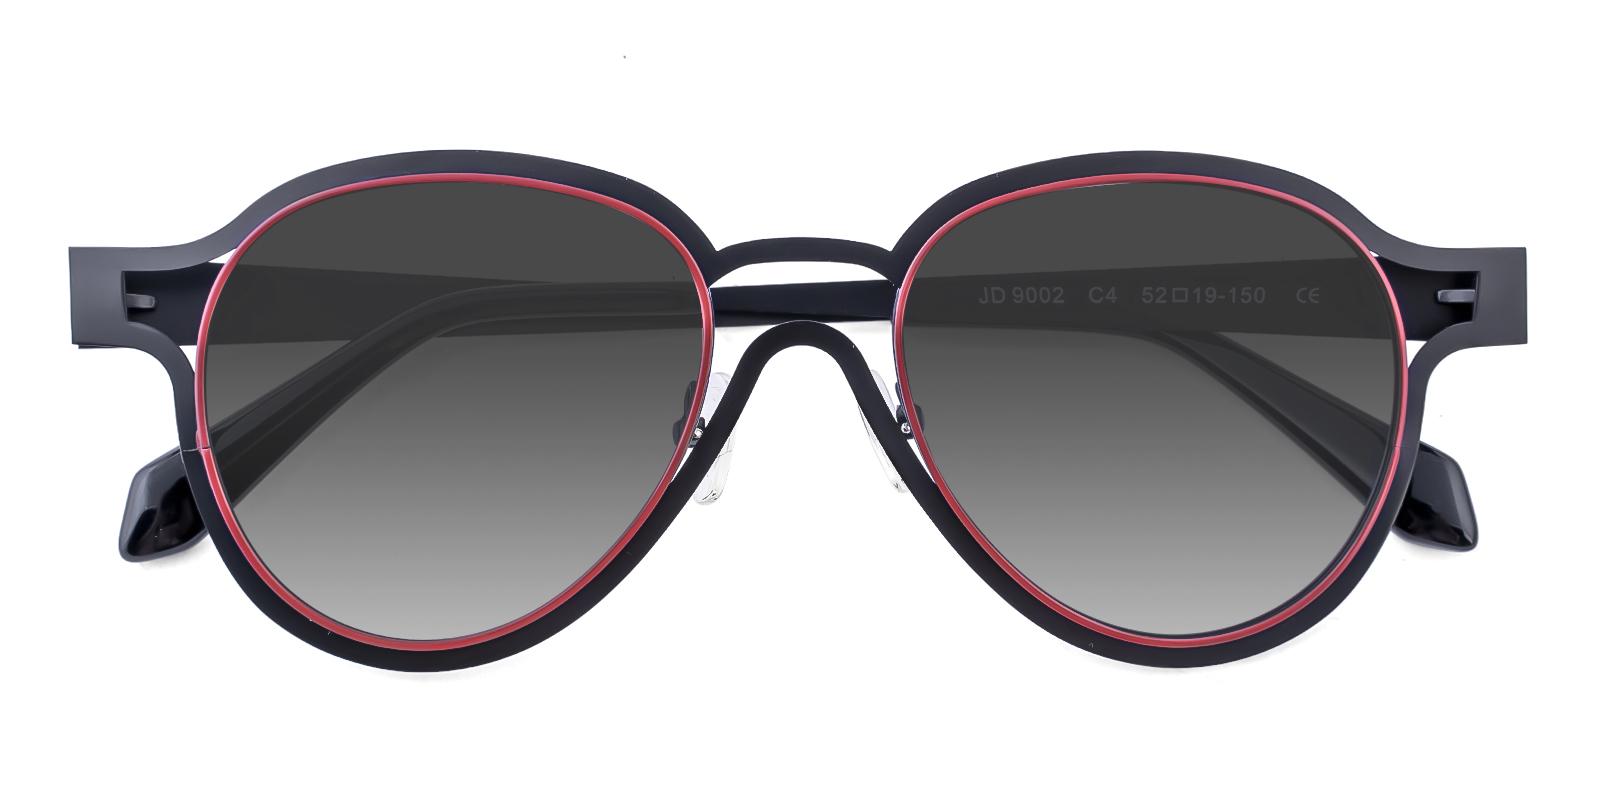 Phano Black Metal NosePads , Sunglasses Frames from ABBE Glasses